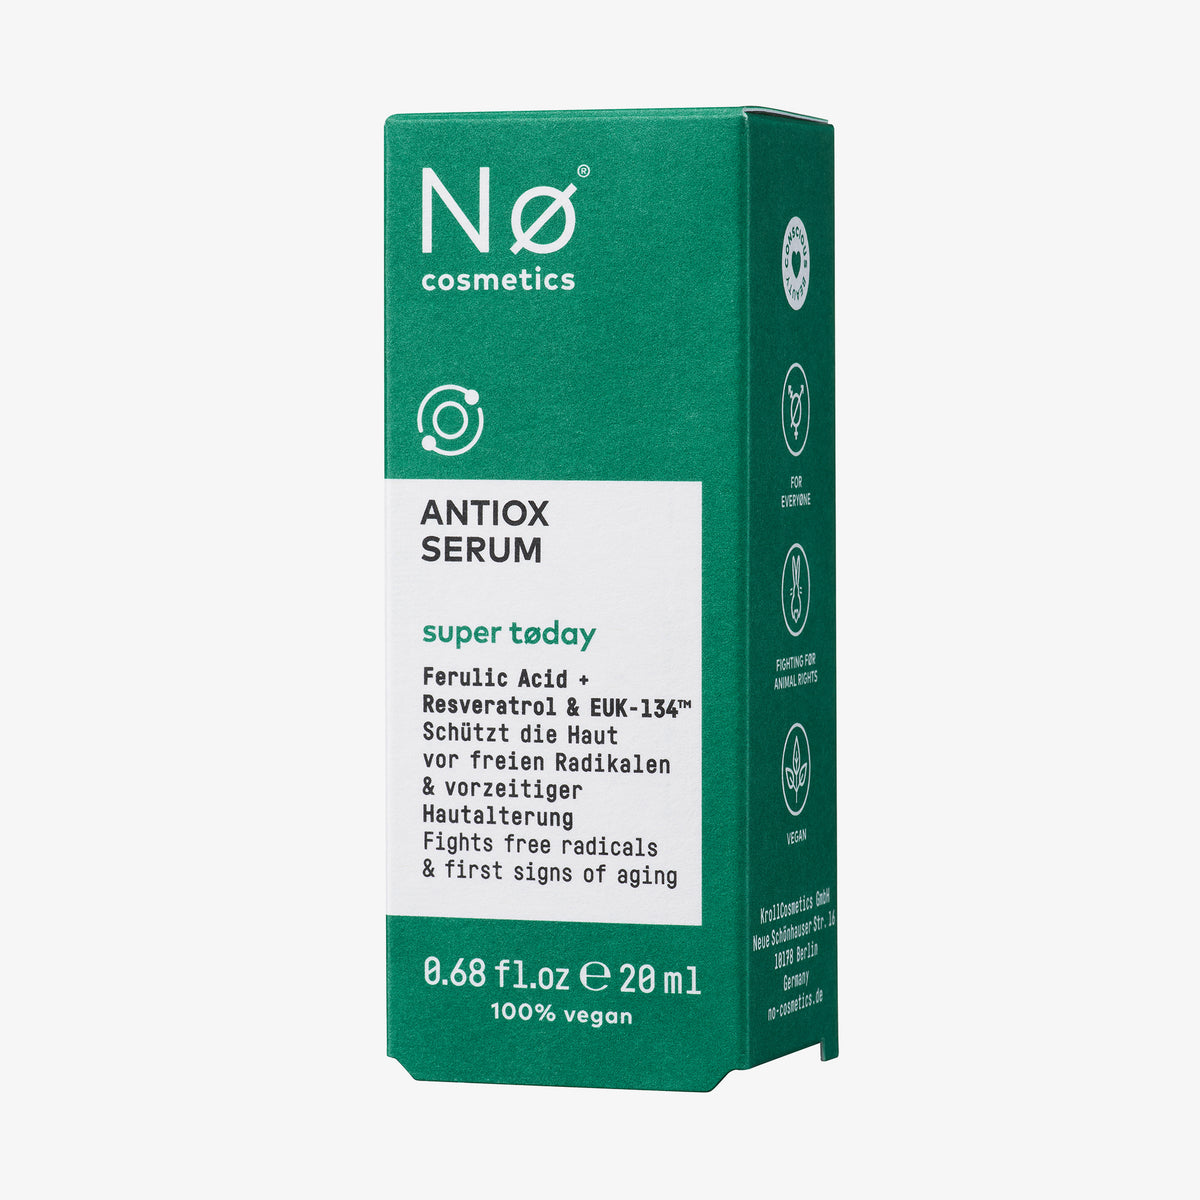 Nø Cosmetics | Super Tøday Antiox Serum